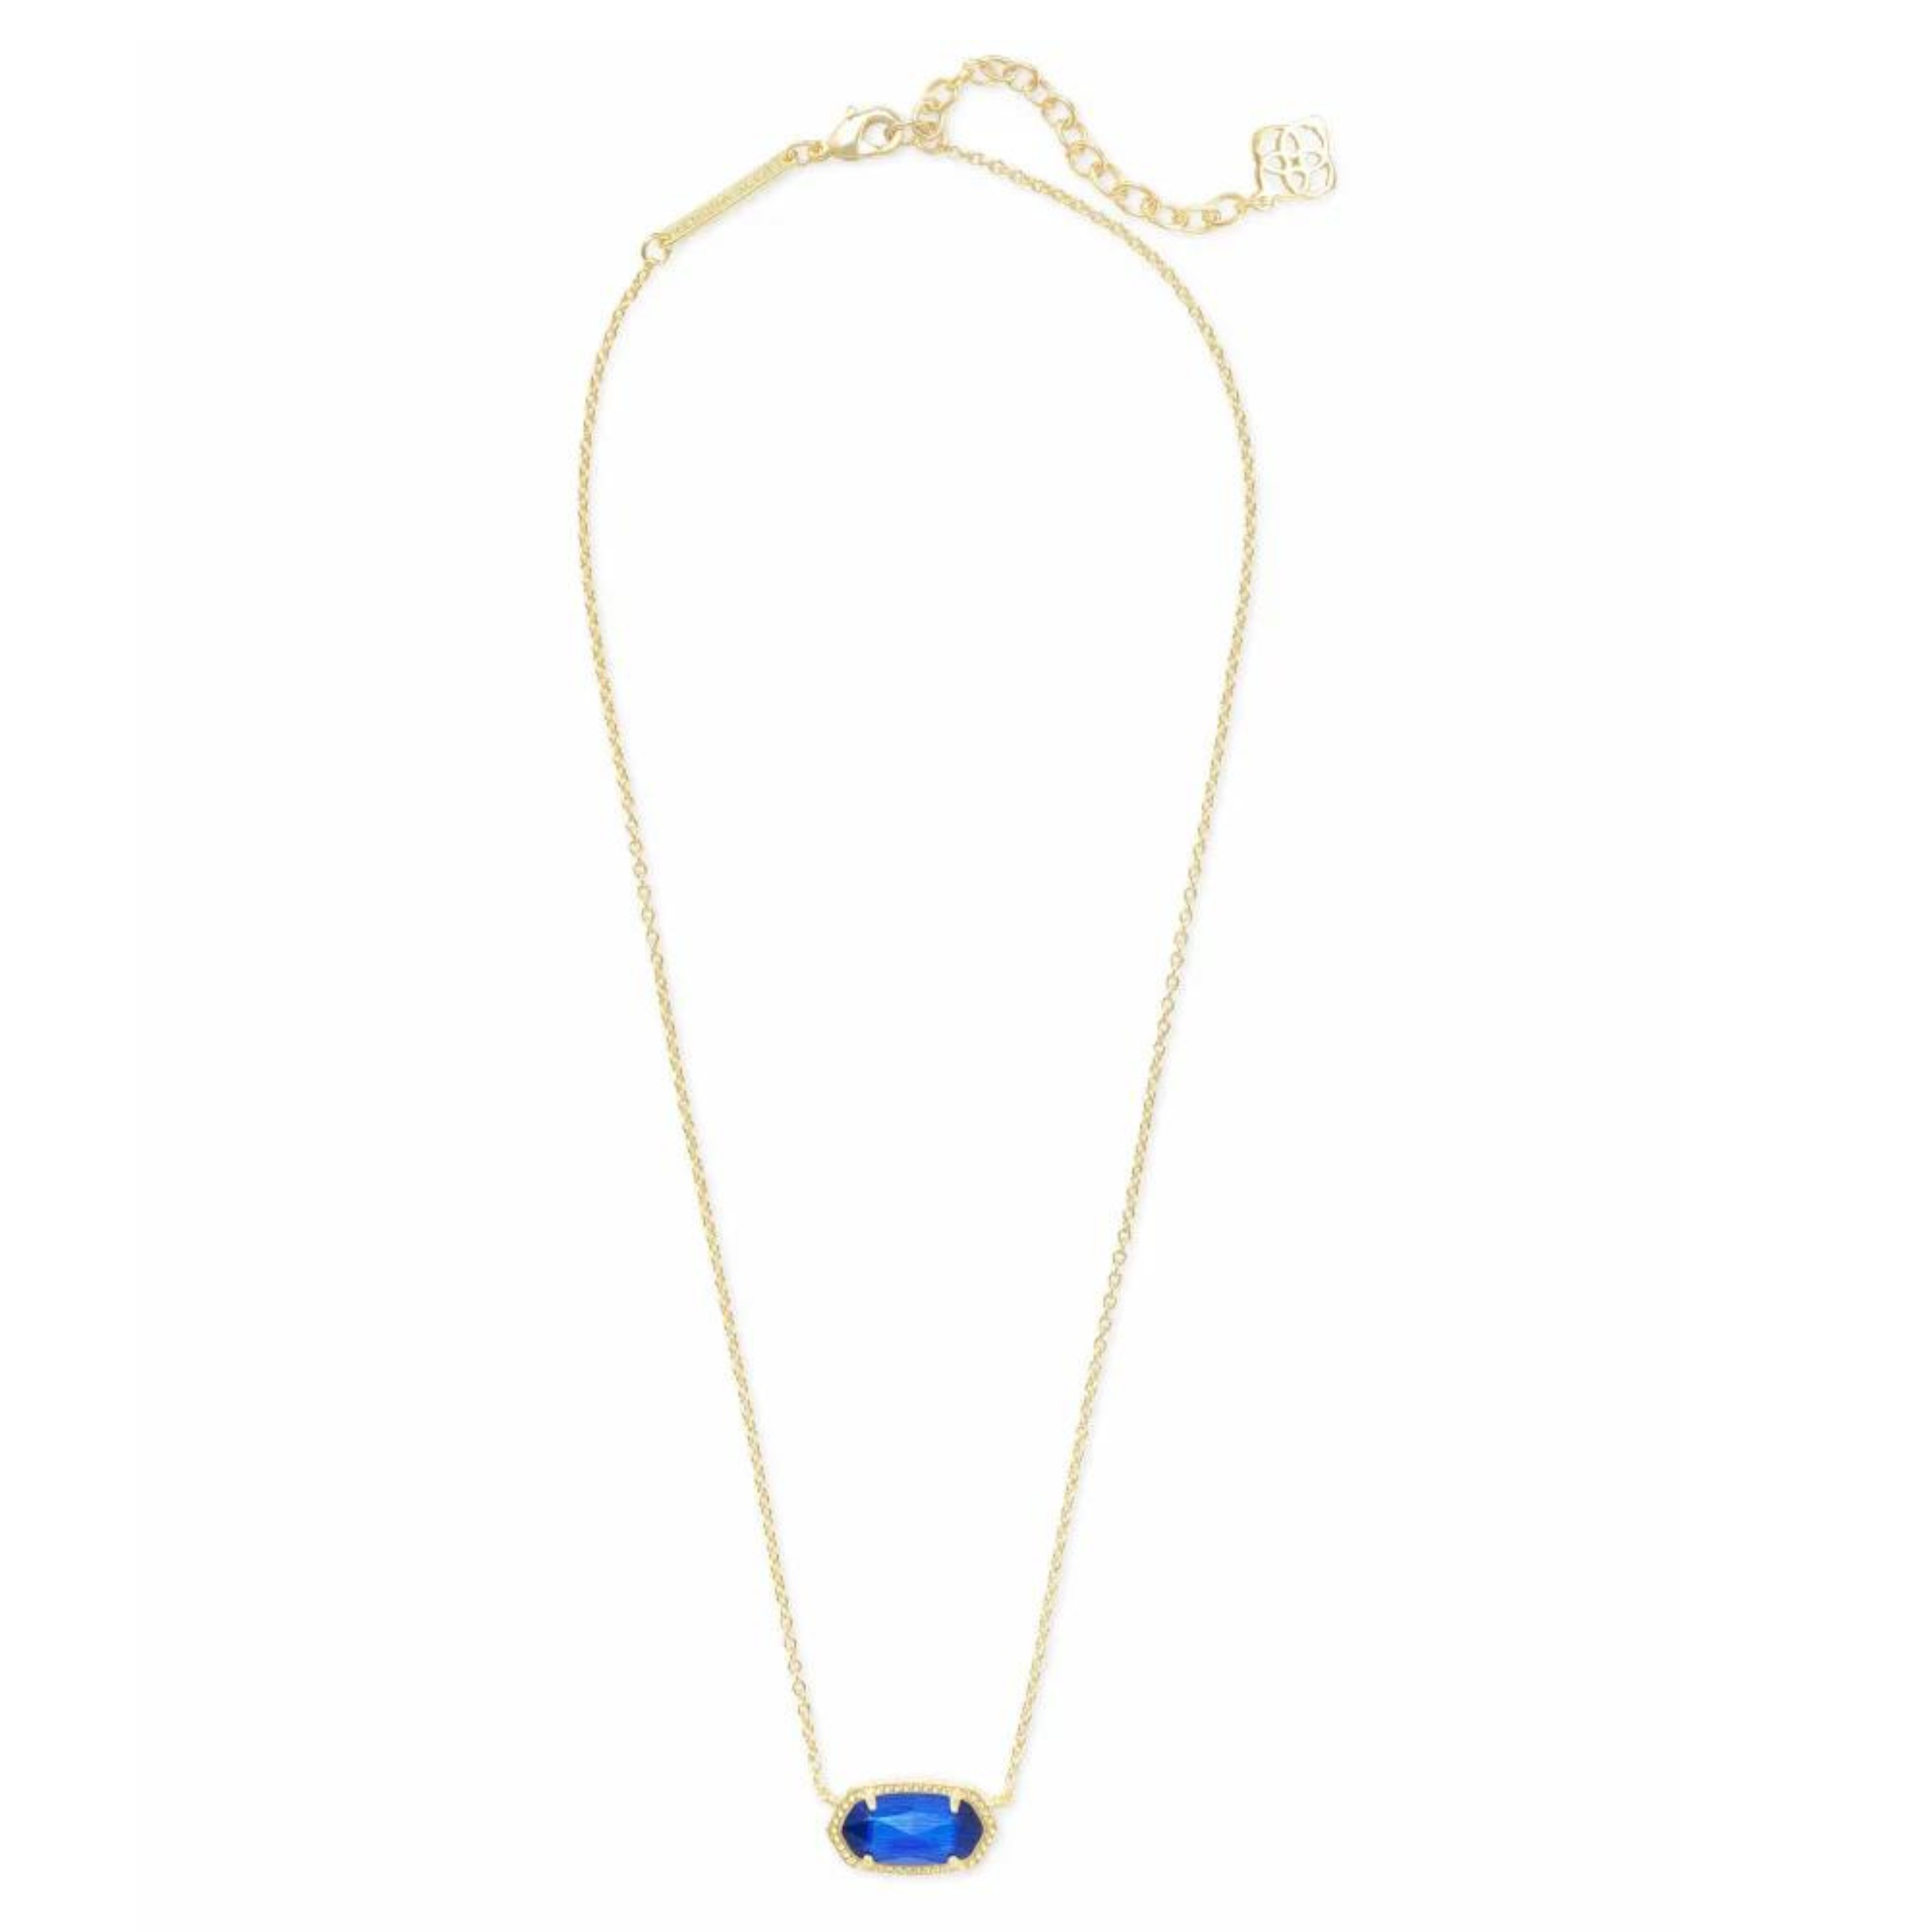 Kendra Scott |  Elisa Gold Pendant Necklace in Cobalt Cat's Eye - Giddy Up Glamour Boutique